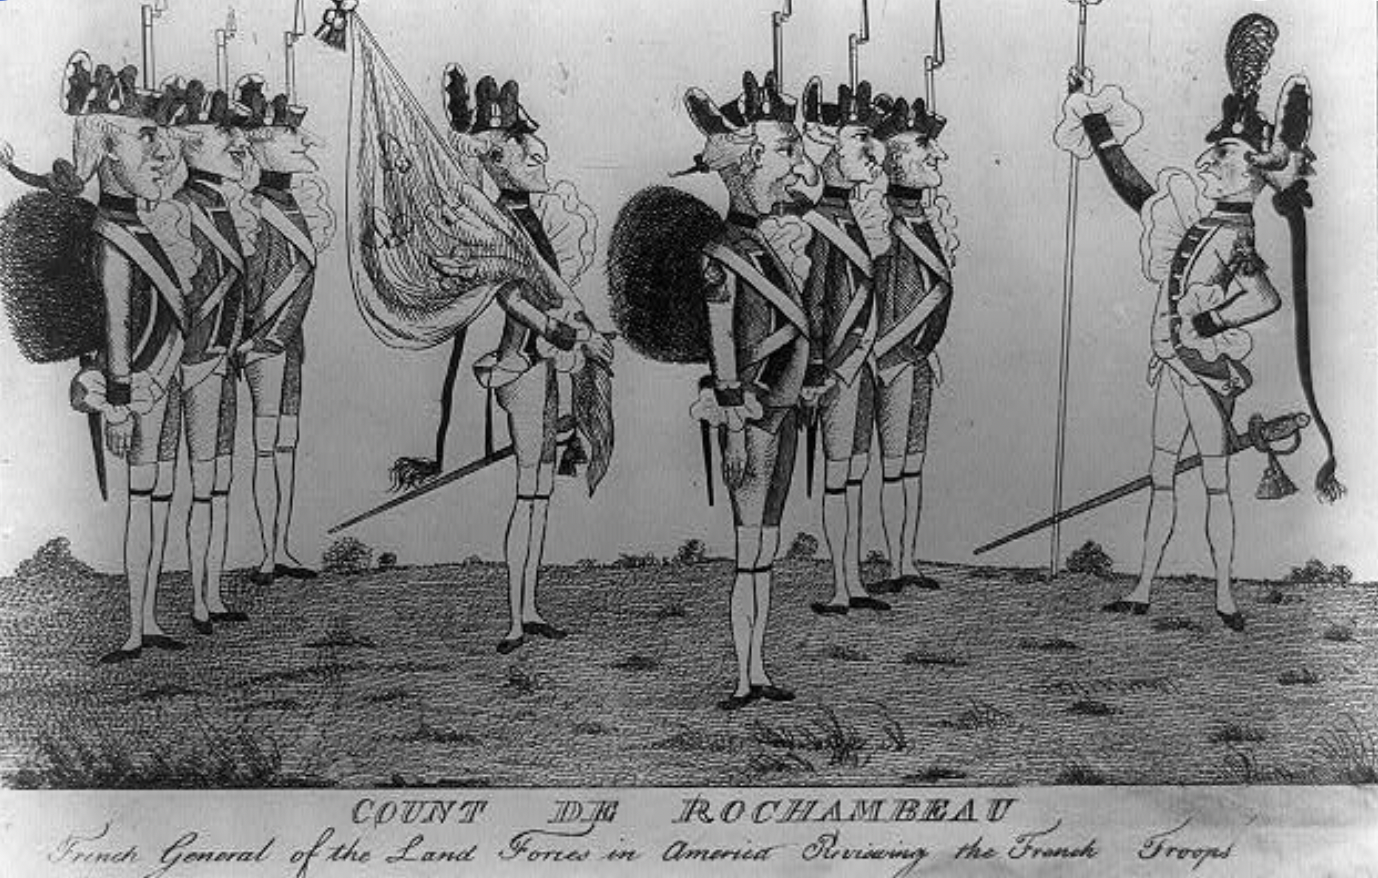 Caricature of Jean-Baptiste Donatien de Vimeur de Rochambeau (1725-1807). "Count de Rochambeau, French general of the land forces in America reviewing the French troops". Etching. Public Domain. 